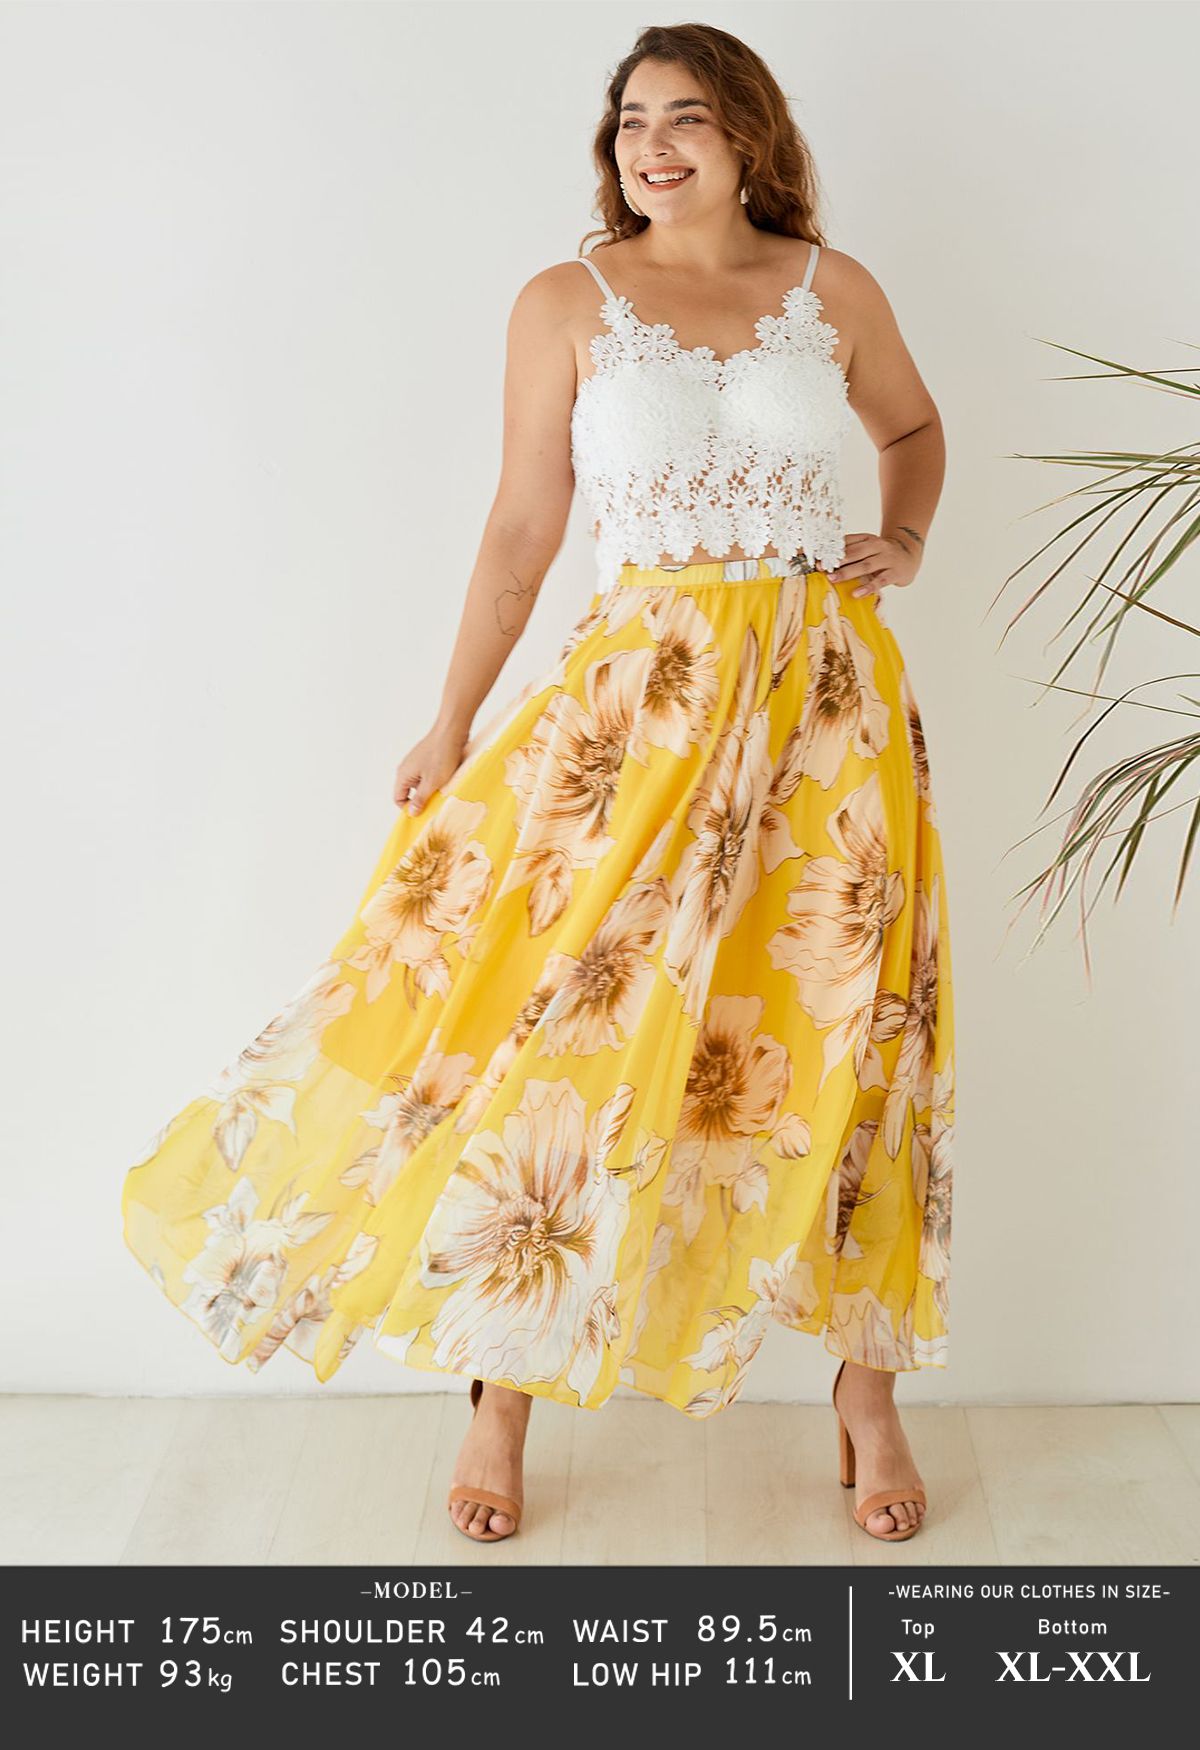 Falda larga Marvellous floral en amarillo